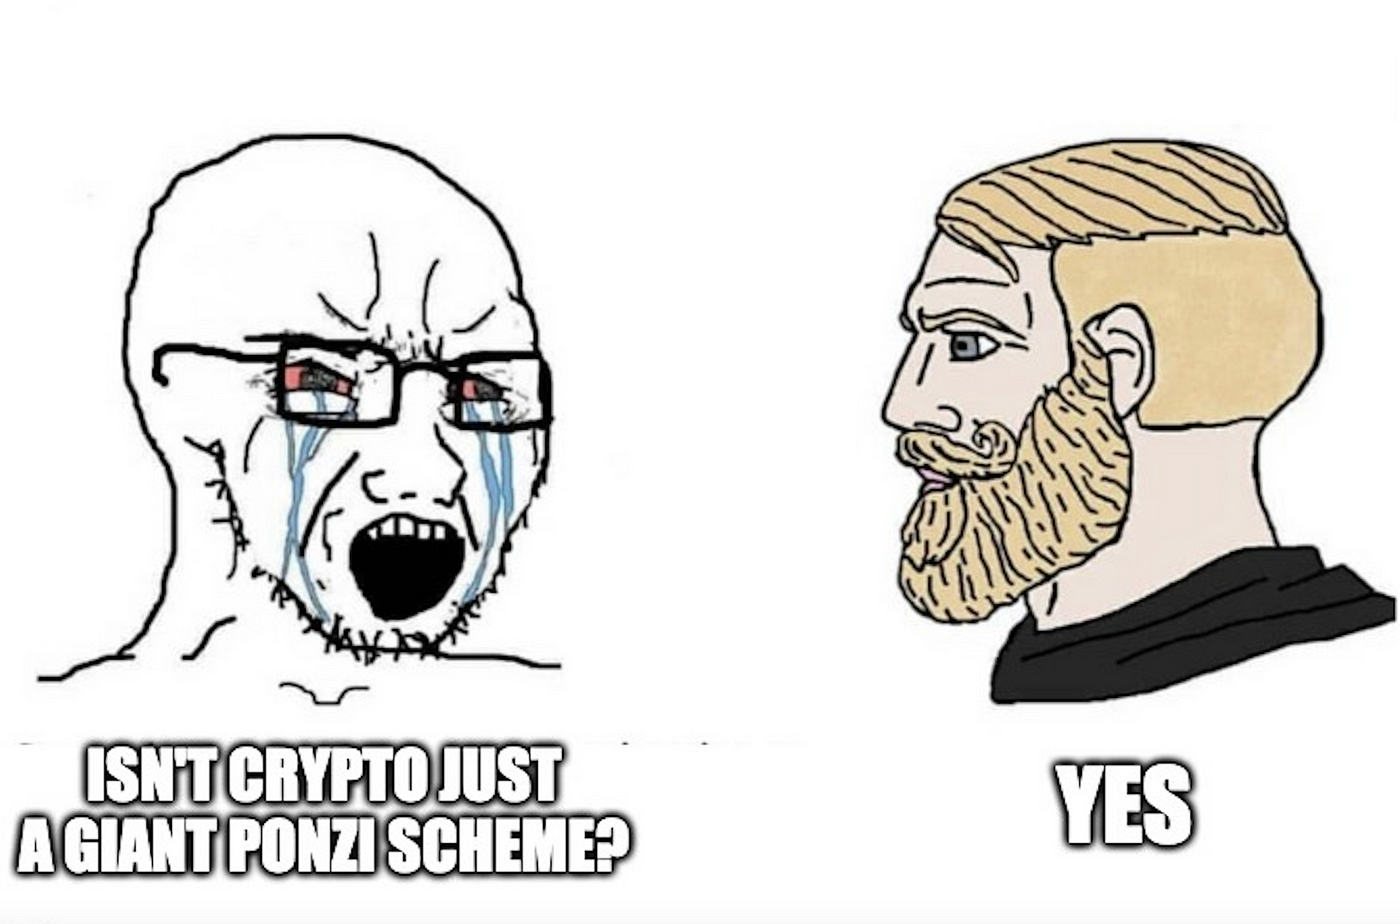 Crypto News: Meme Coins Make a Comeback on the Return of the Bulls